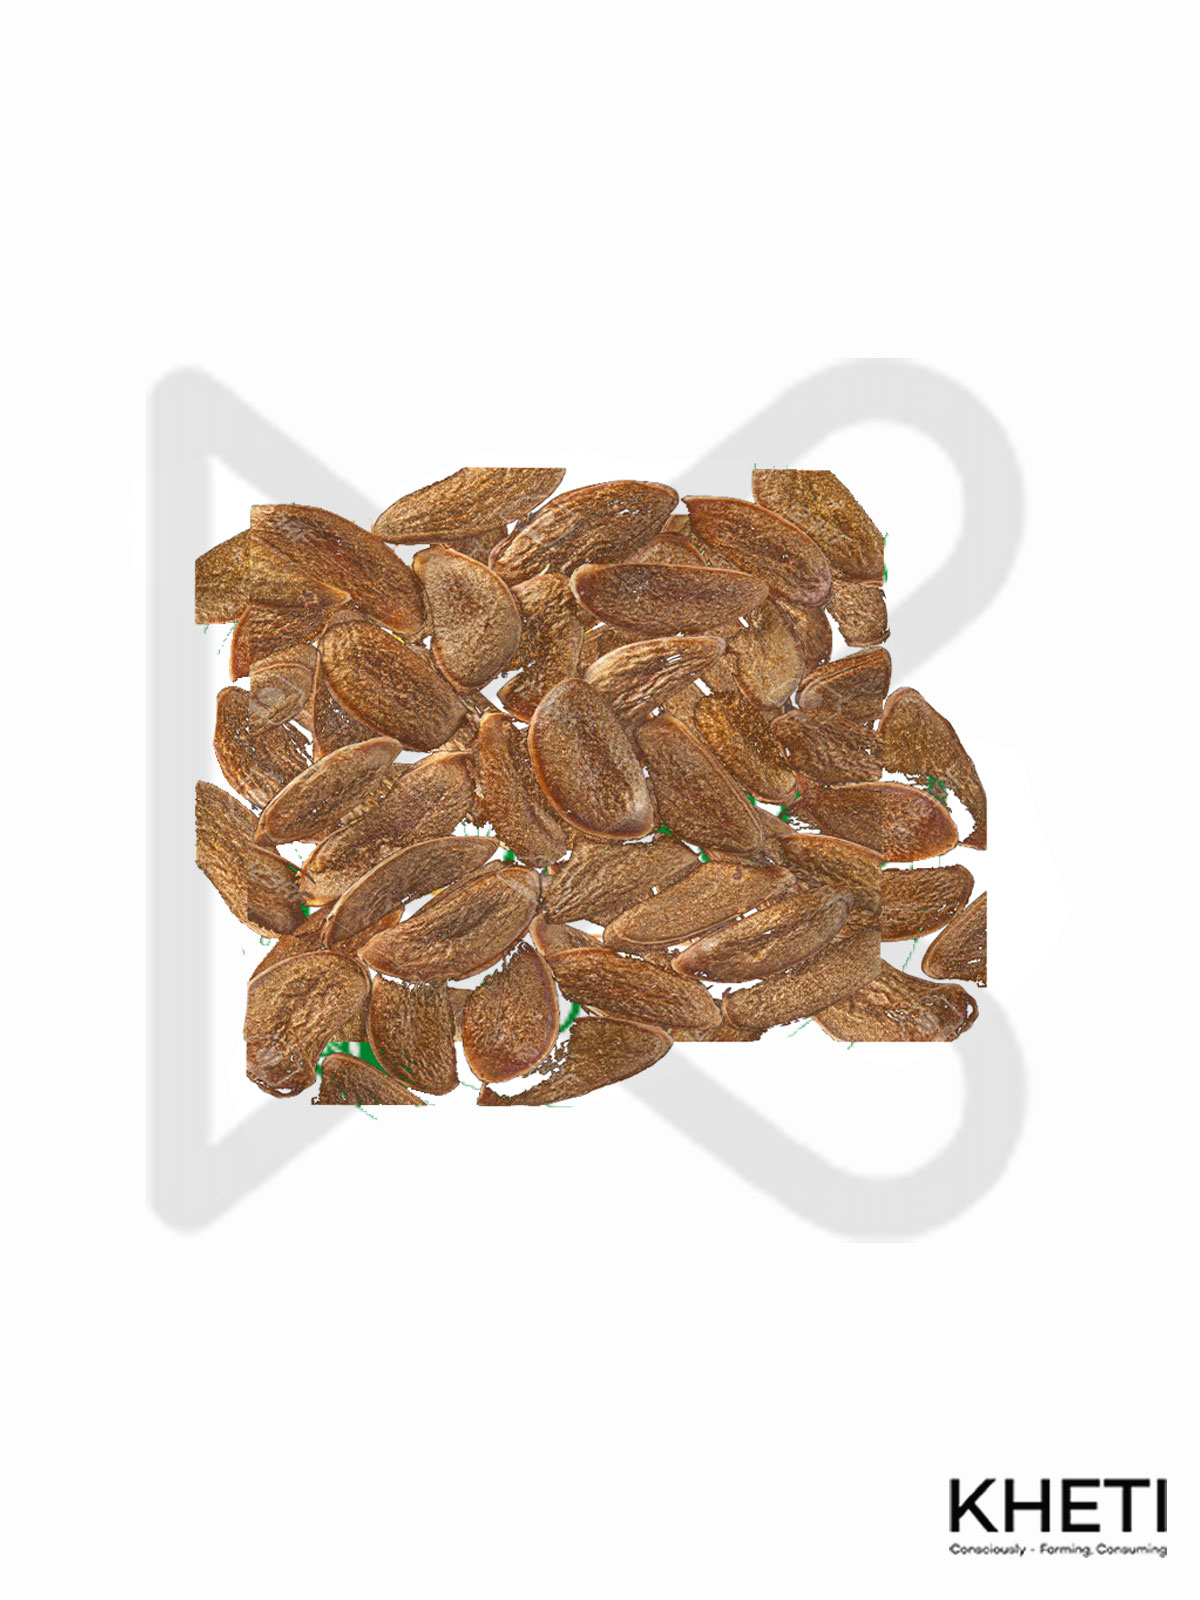 Persimmon seed (haluwa bhed)